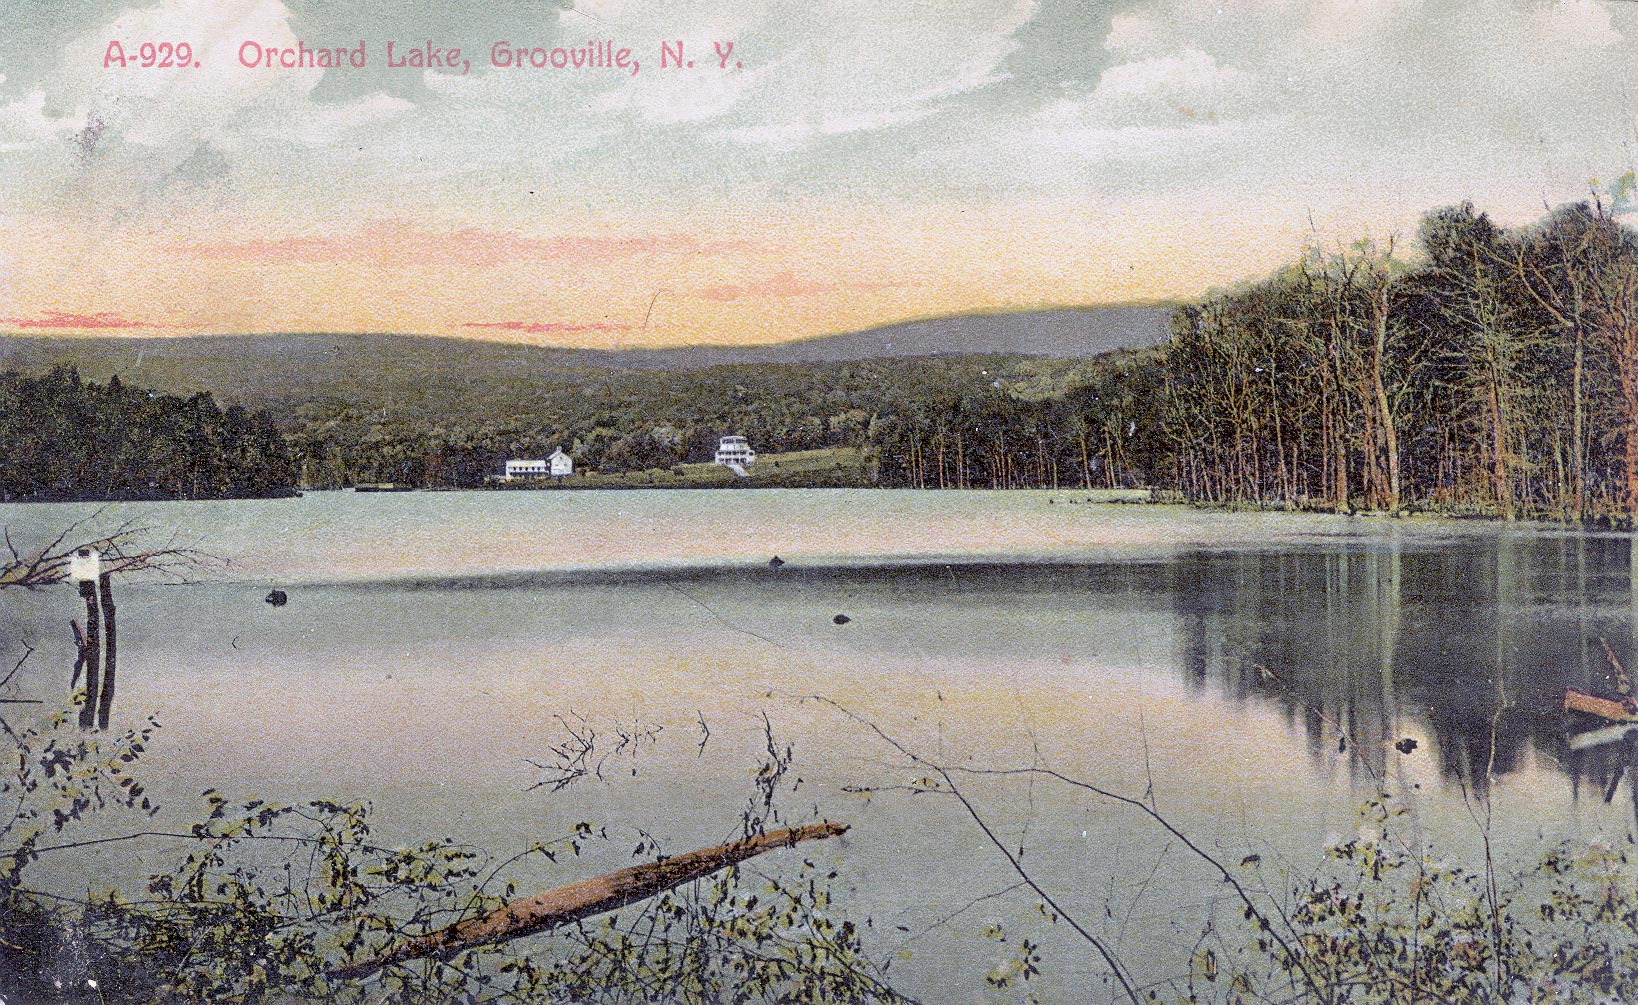 1908 postcard of Orchard Lake